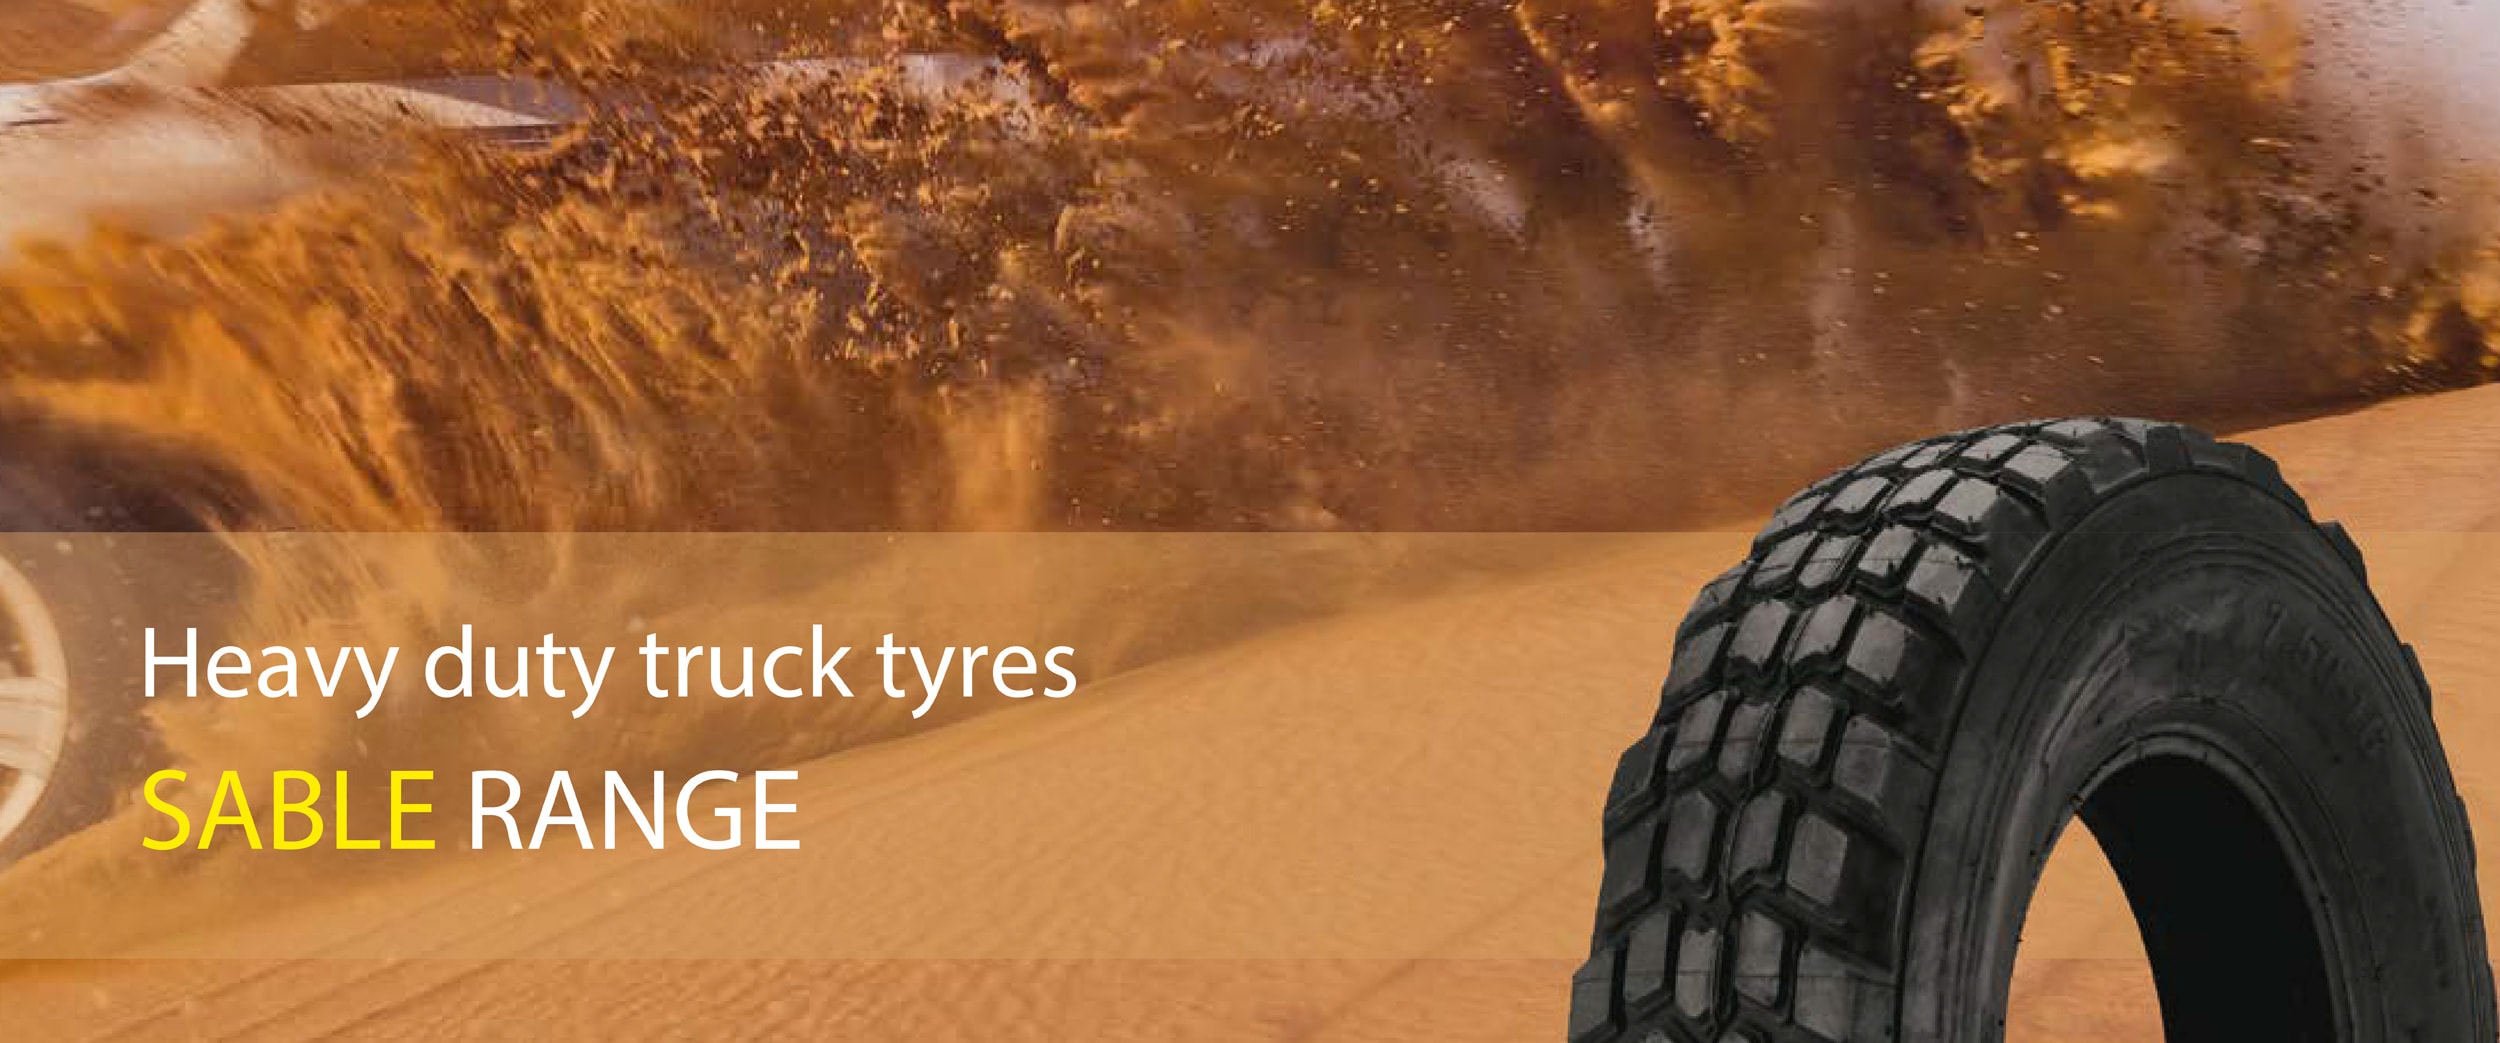 Heavy duty truck tyres - SABLE RANGE